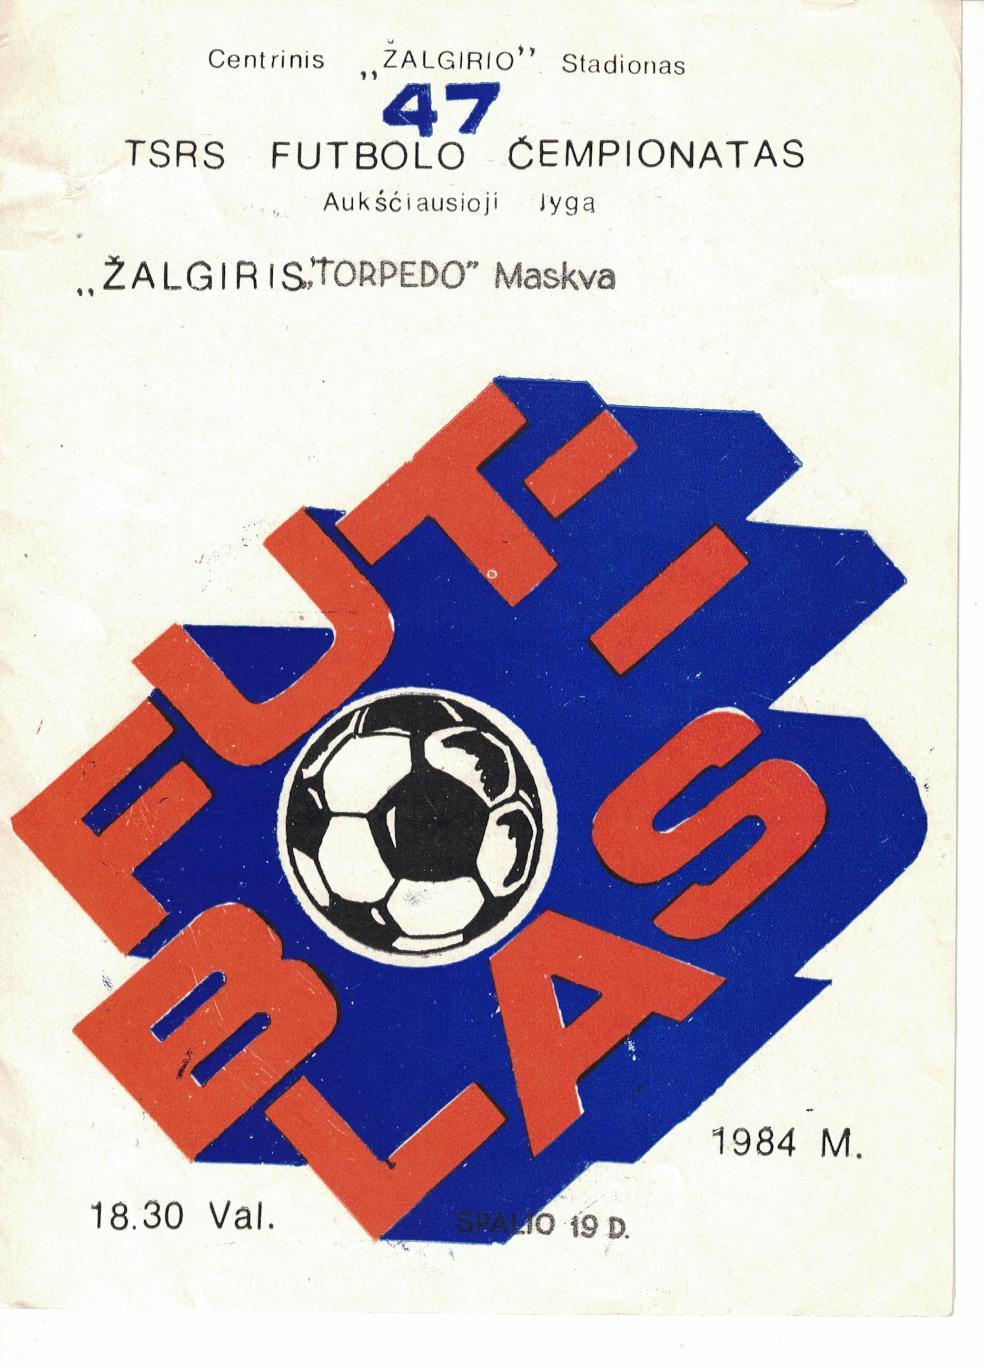 Жальгирис Вильнюс - Торпедо Москва 19.10.1984 Чемпионат СССР